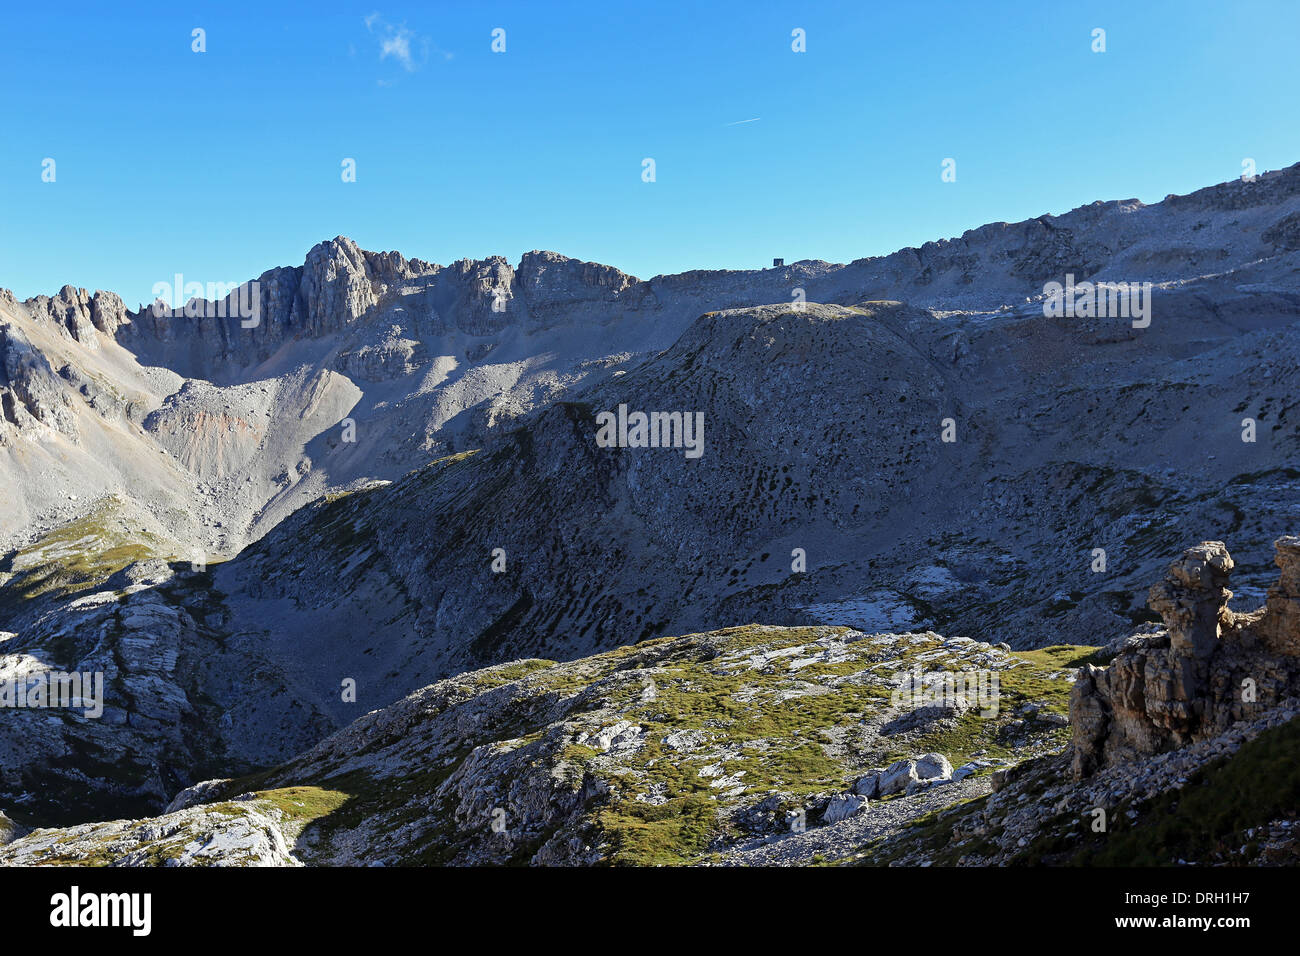 The Latemar mountain range. The Dolomites of Fiemme Valley.  Valsorda valley; Lastei di Valsorda, Cima Feudo. Trentino, Italian Alps. Europe. Stock Photo